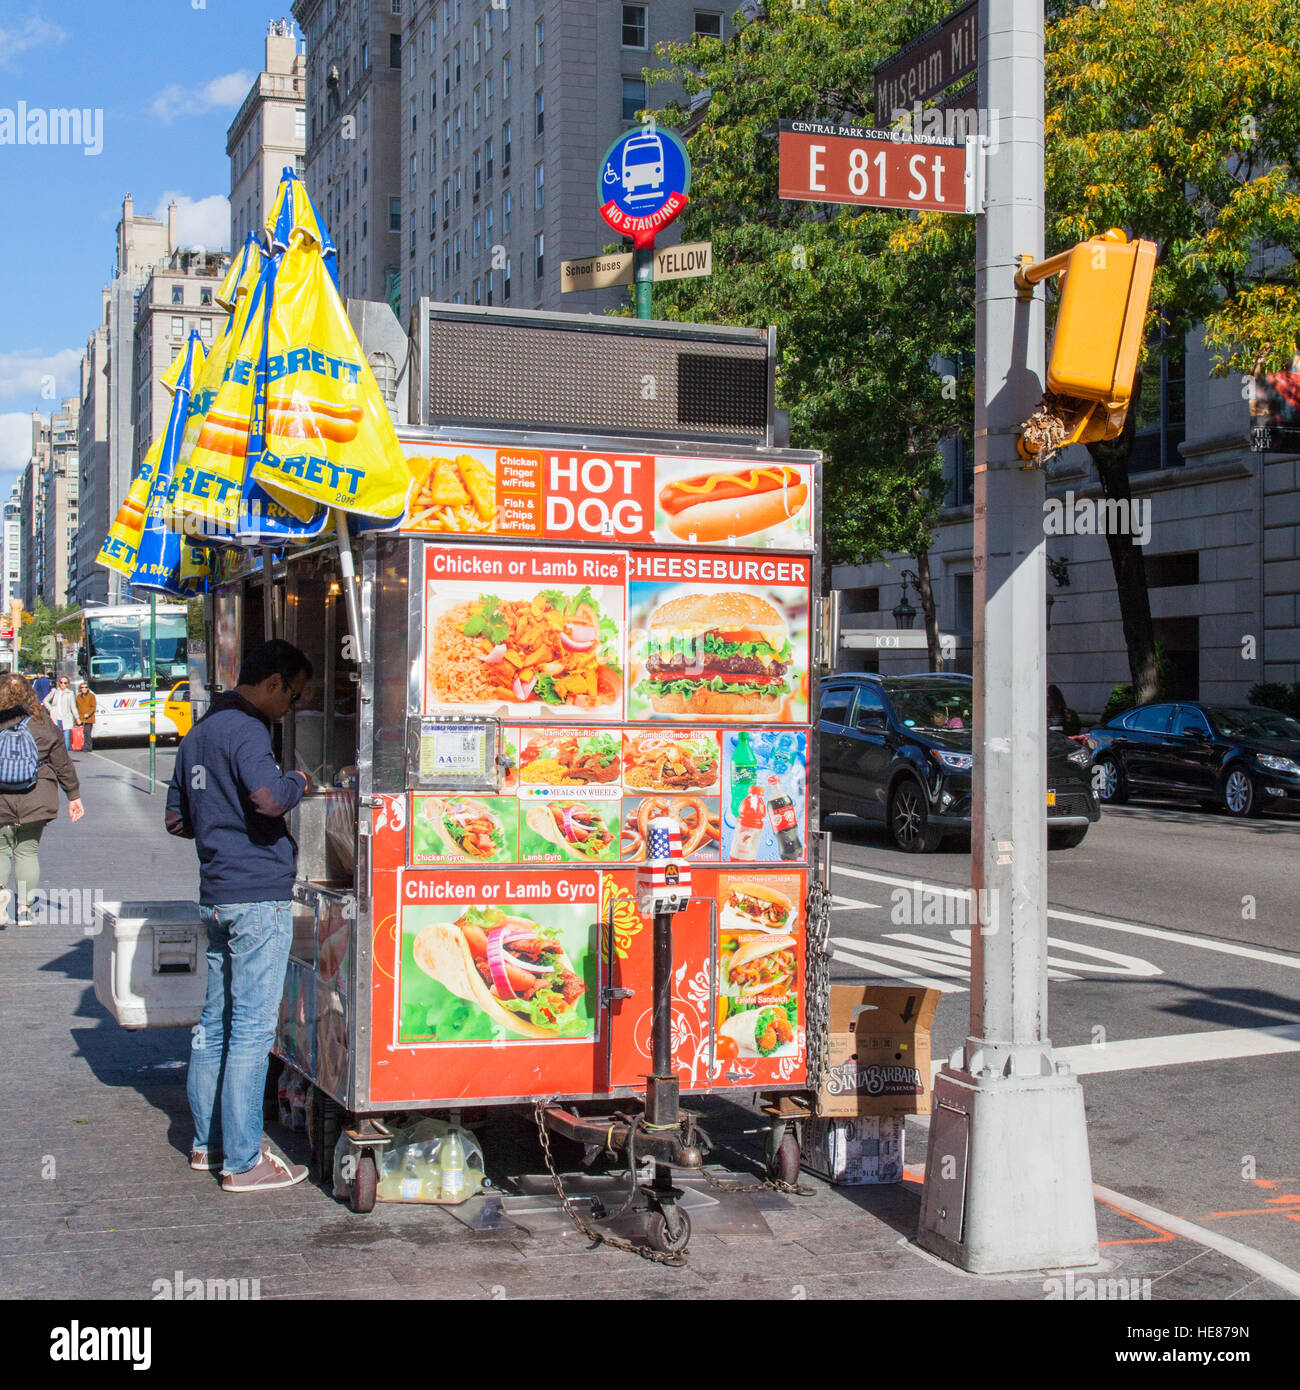 Hot dog street vendor stall, New York City, United States of America. Stock Photo